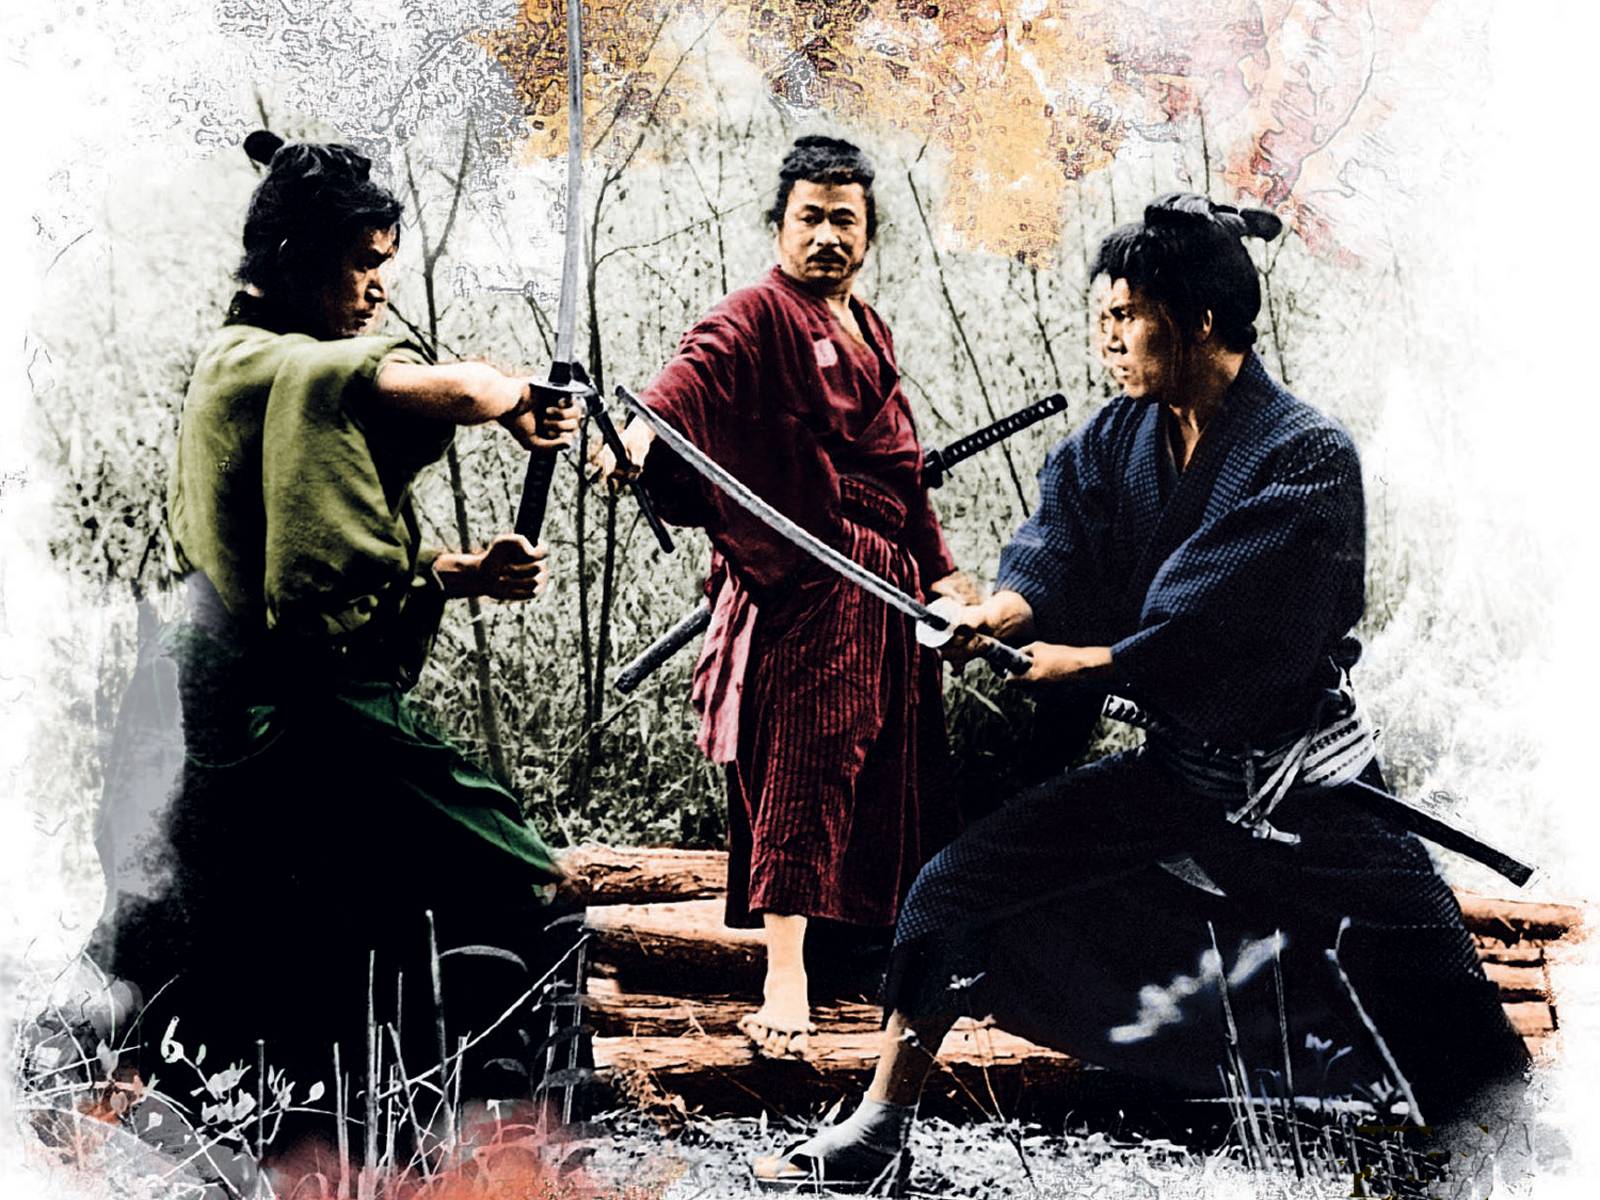 Three Outlaw Samurai (Wallpaper) - Samurai Movies Wallpaper